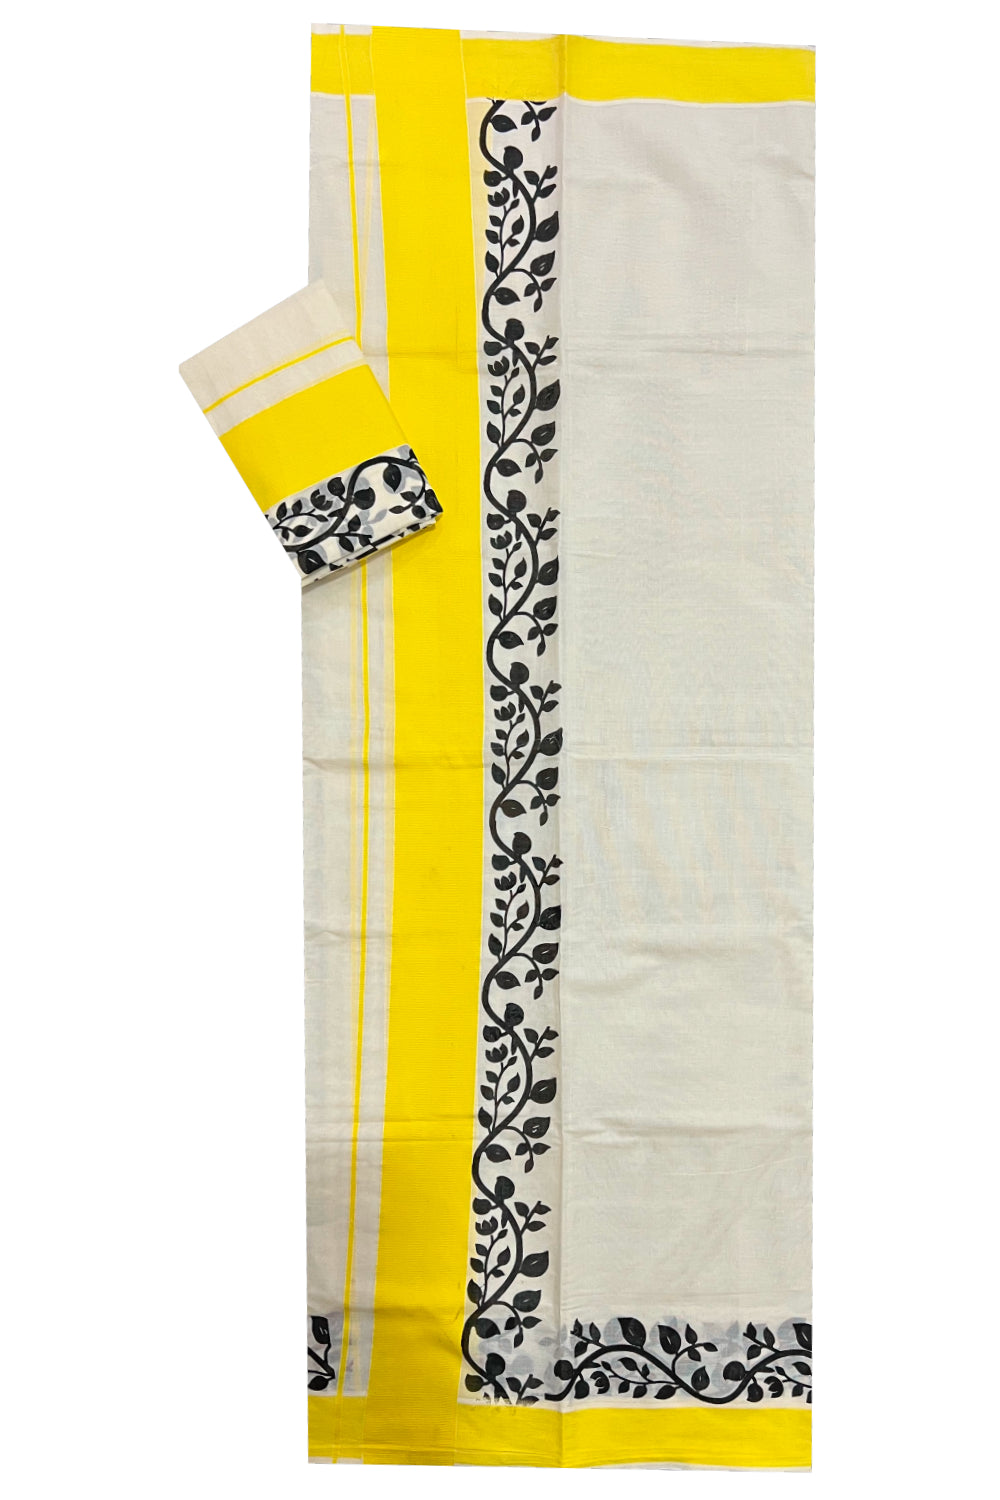 Southloom Original Design Onam Single Set Mundu (Mundum Neriyathum) with Black Floral Vines Block Print and Yellow Border